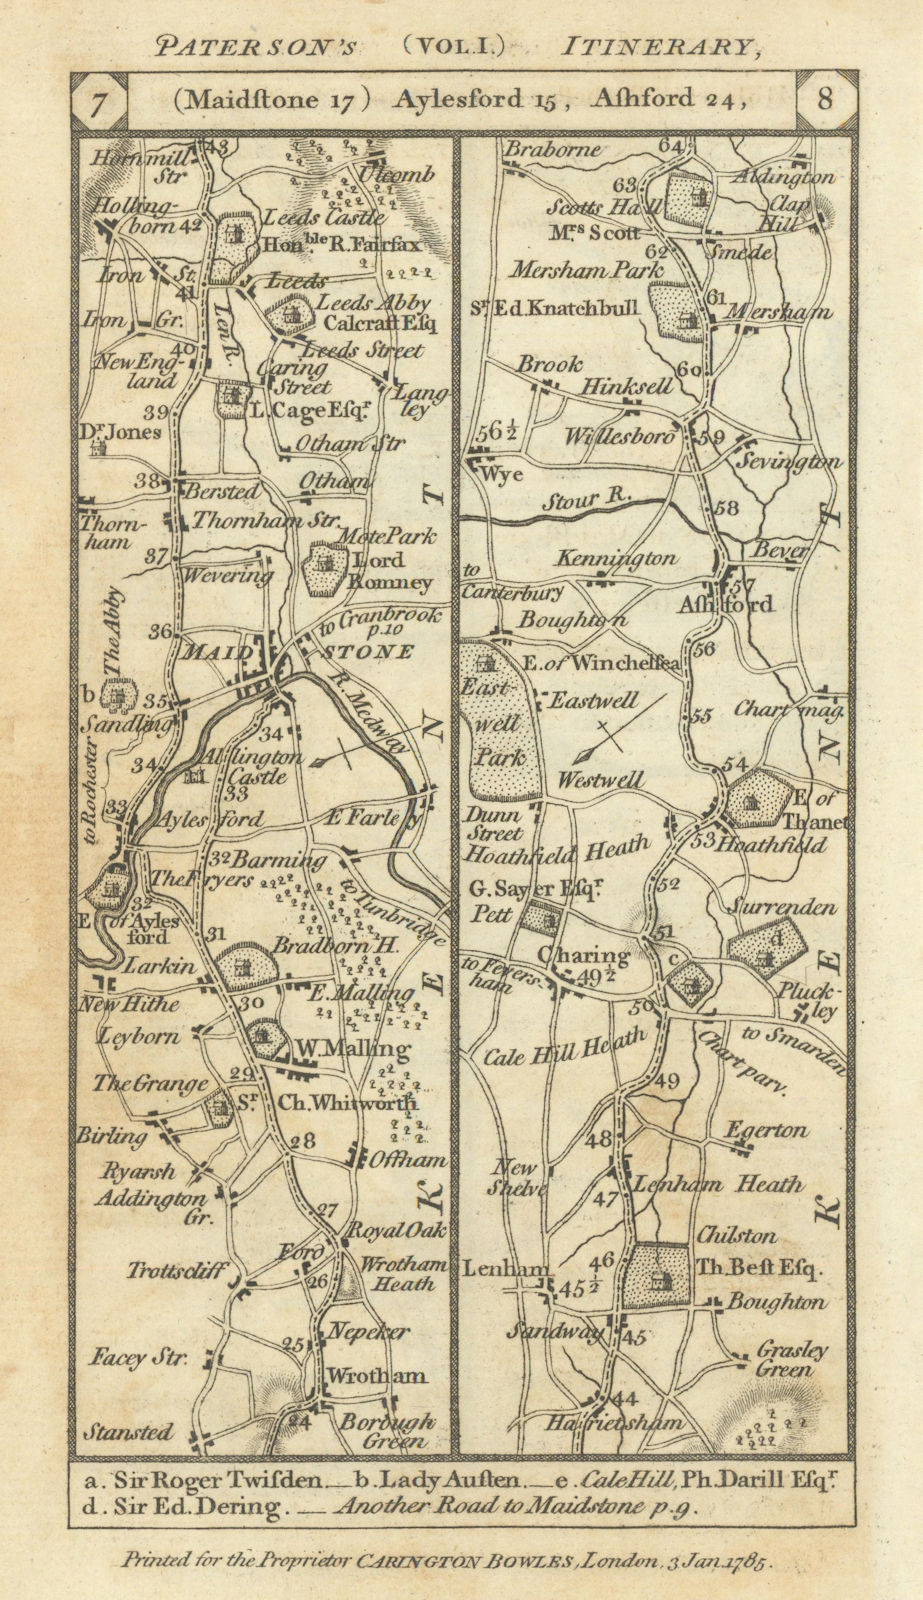 Wrotham-Aylesford-Maidstone-Ashford-Mersham road strip map PATERSON 1785